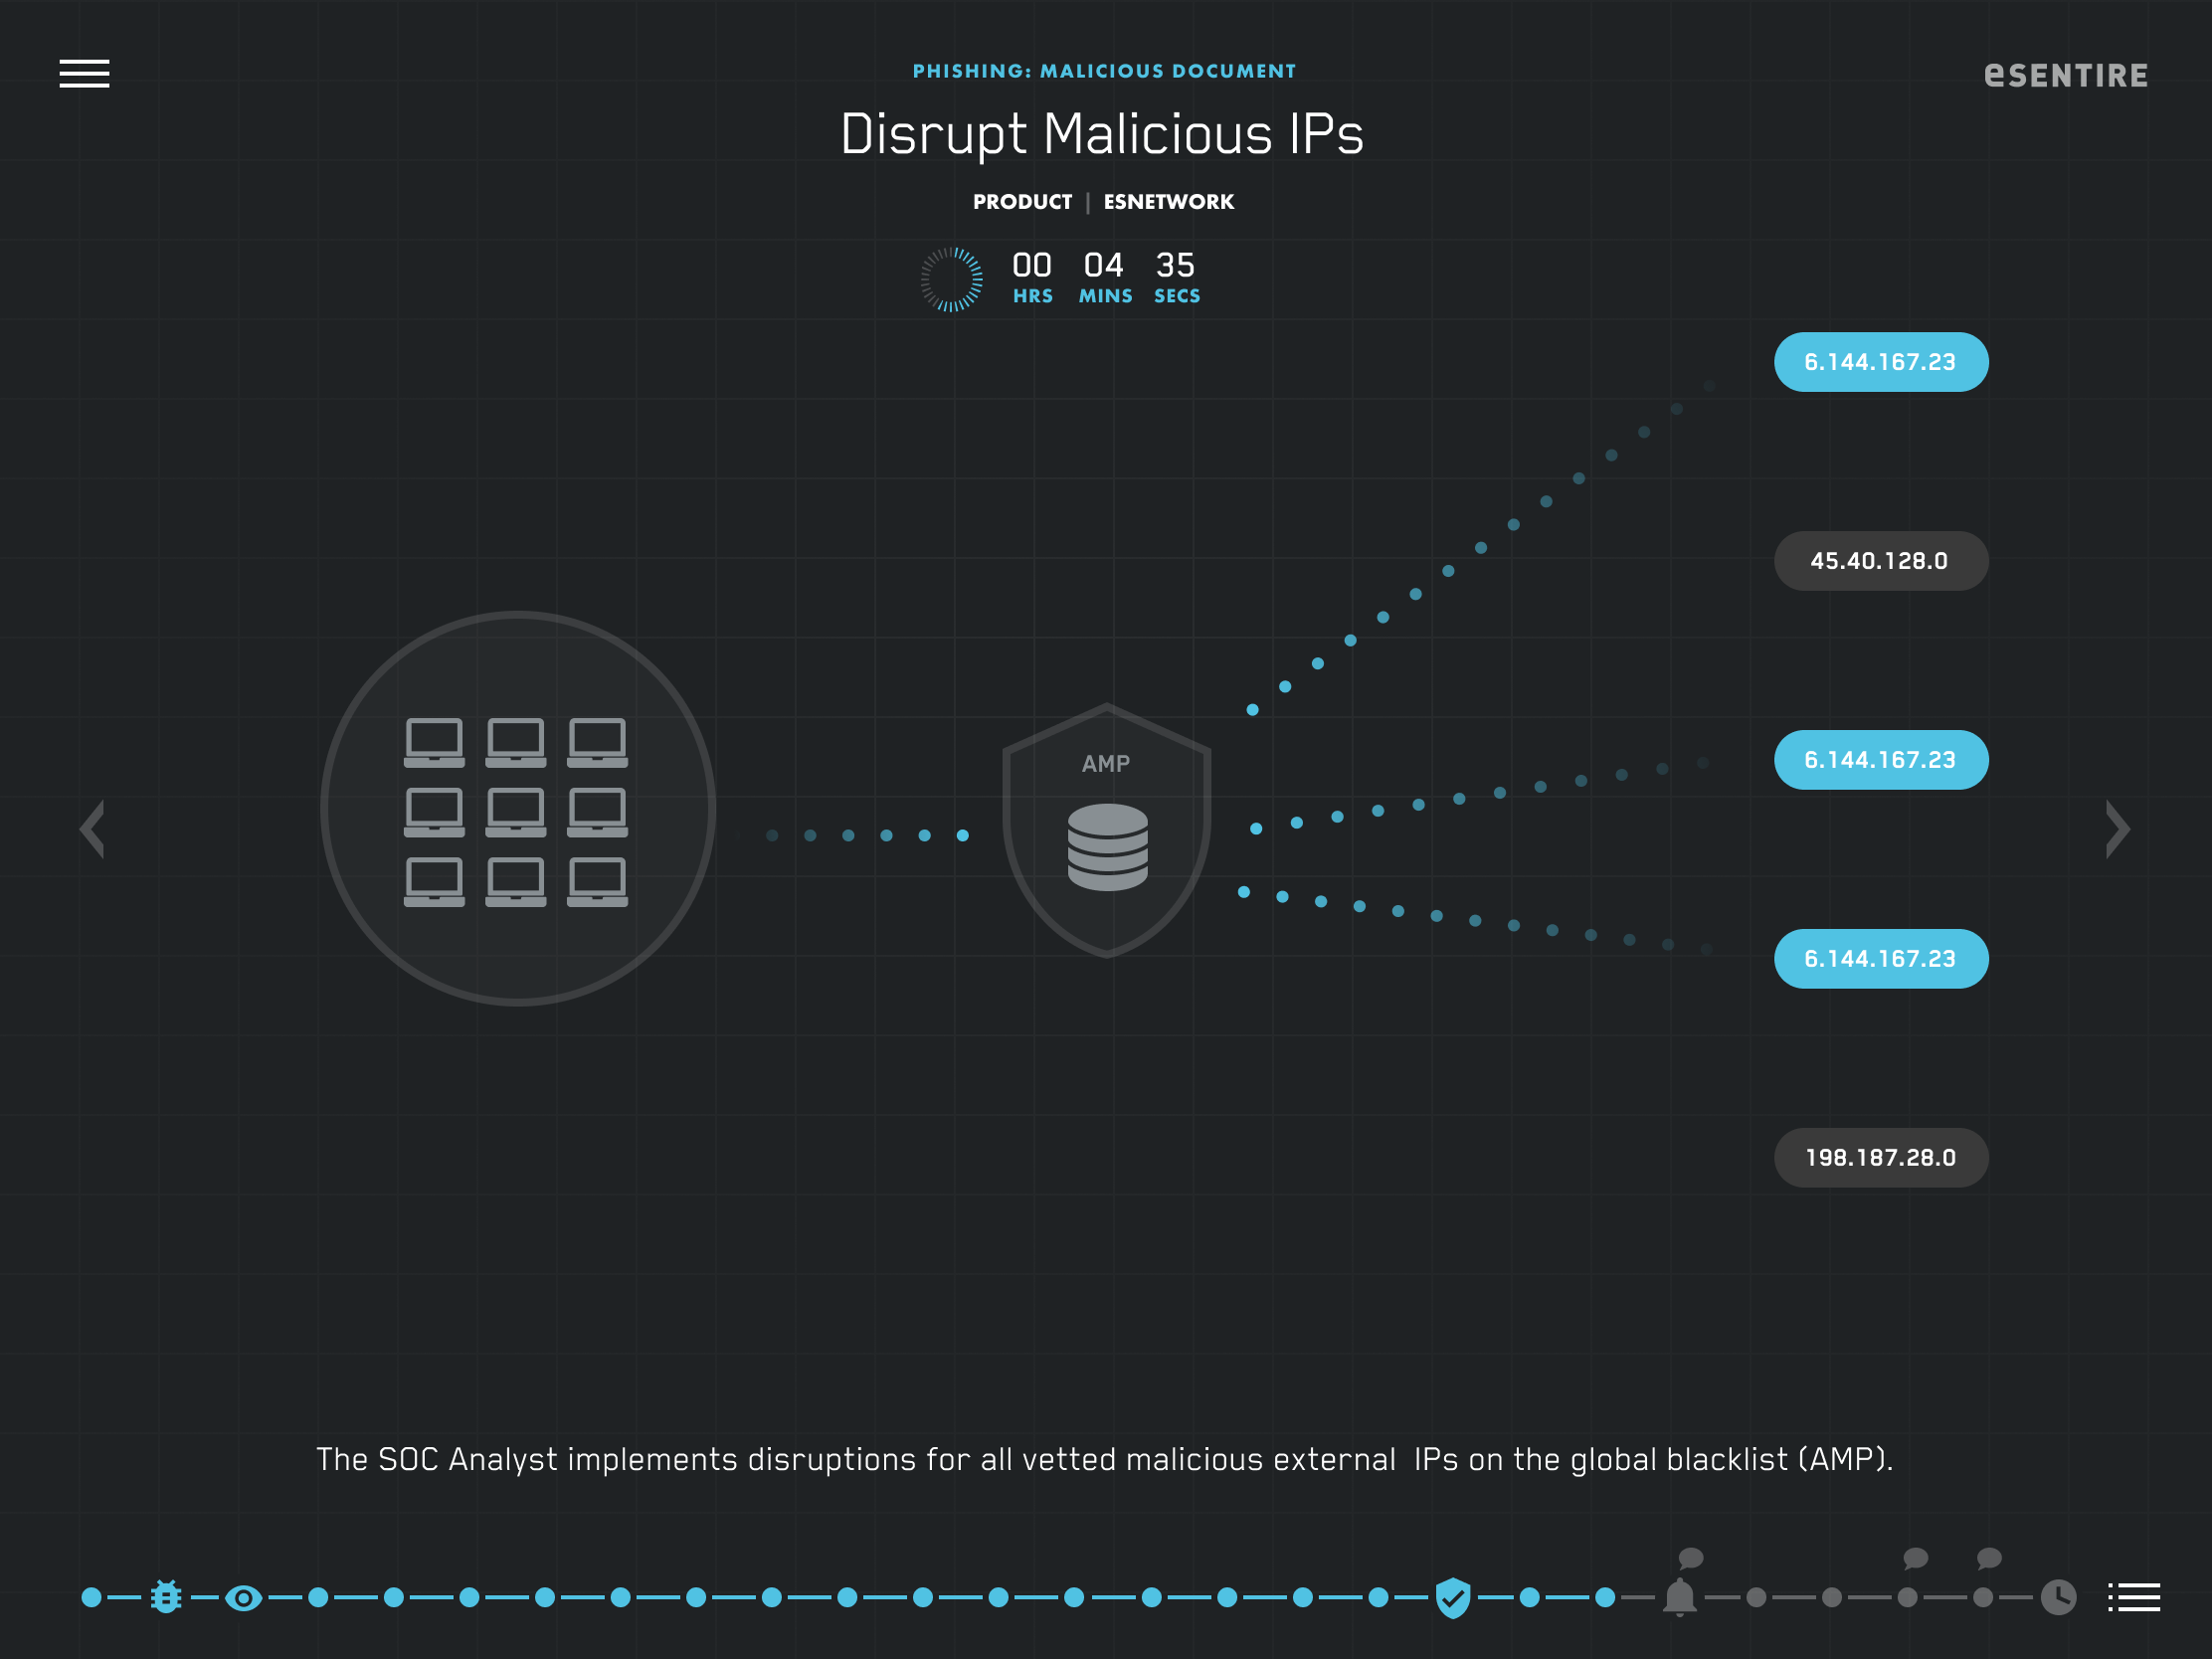 eSentire disrupting malicious IPs